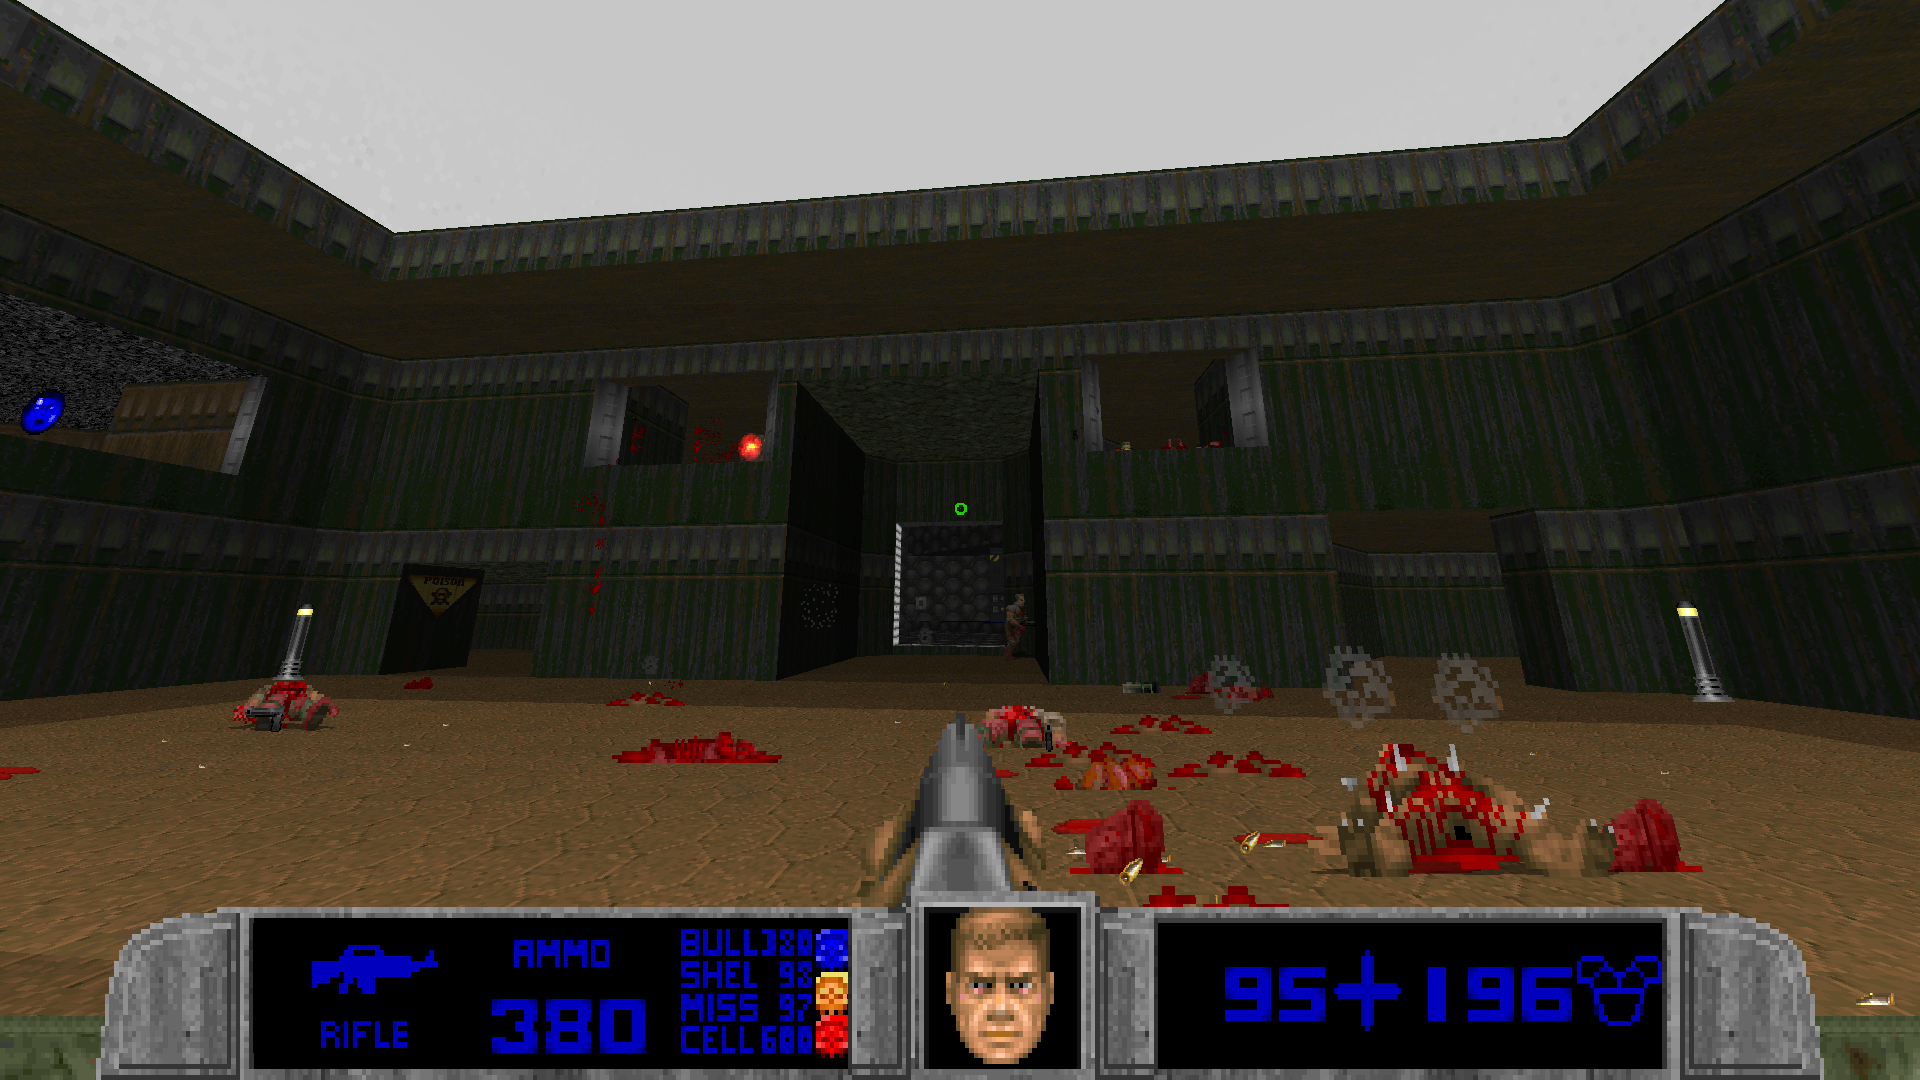 Image 2 - Pepega.wad mod for Doom II - Mod DB